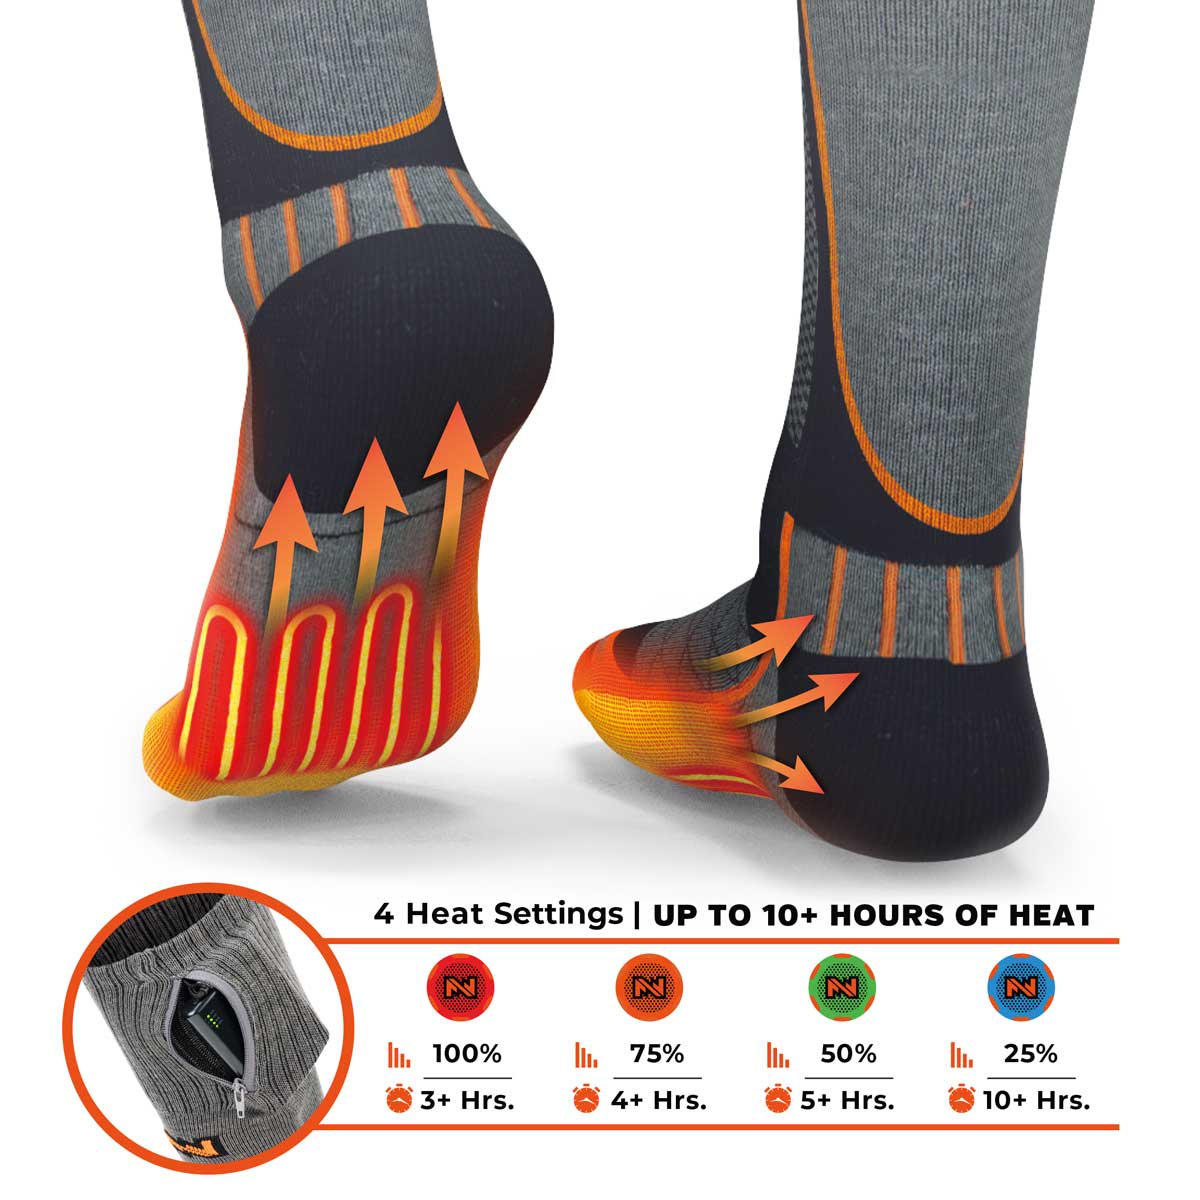 Mobile Warming Merino Heated Socks - Ramakko's Source For Adventure